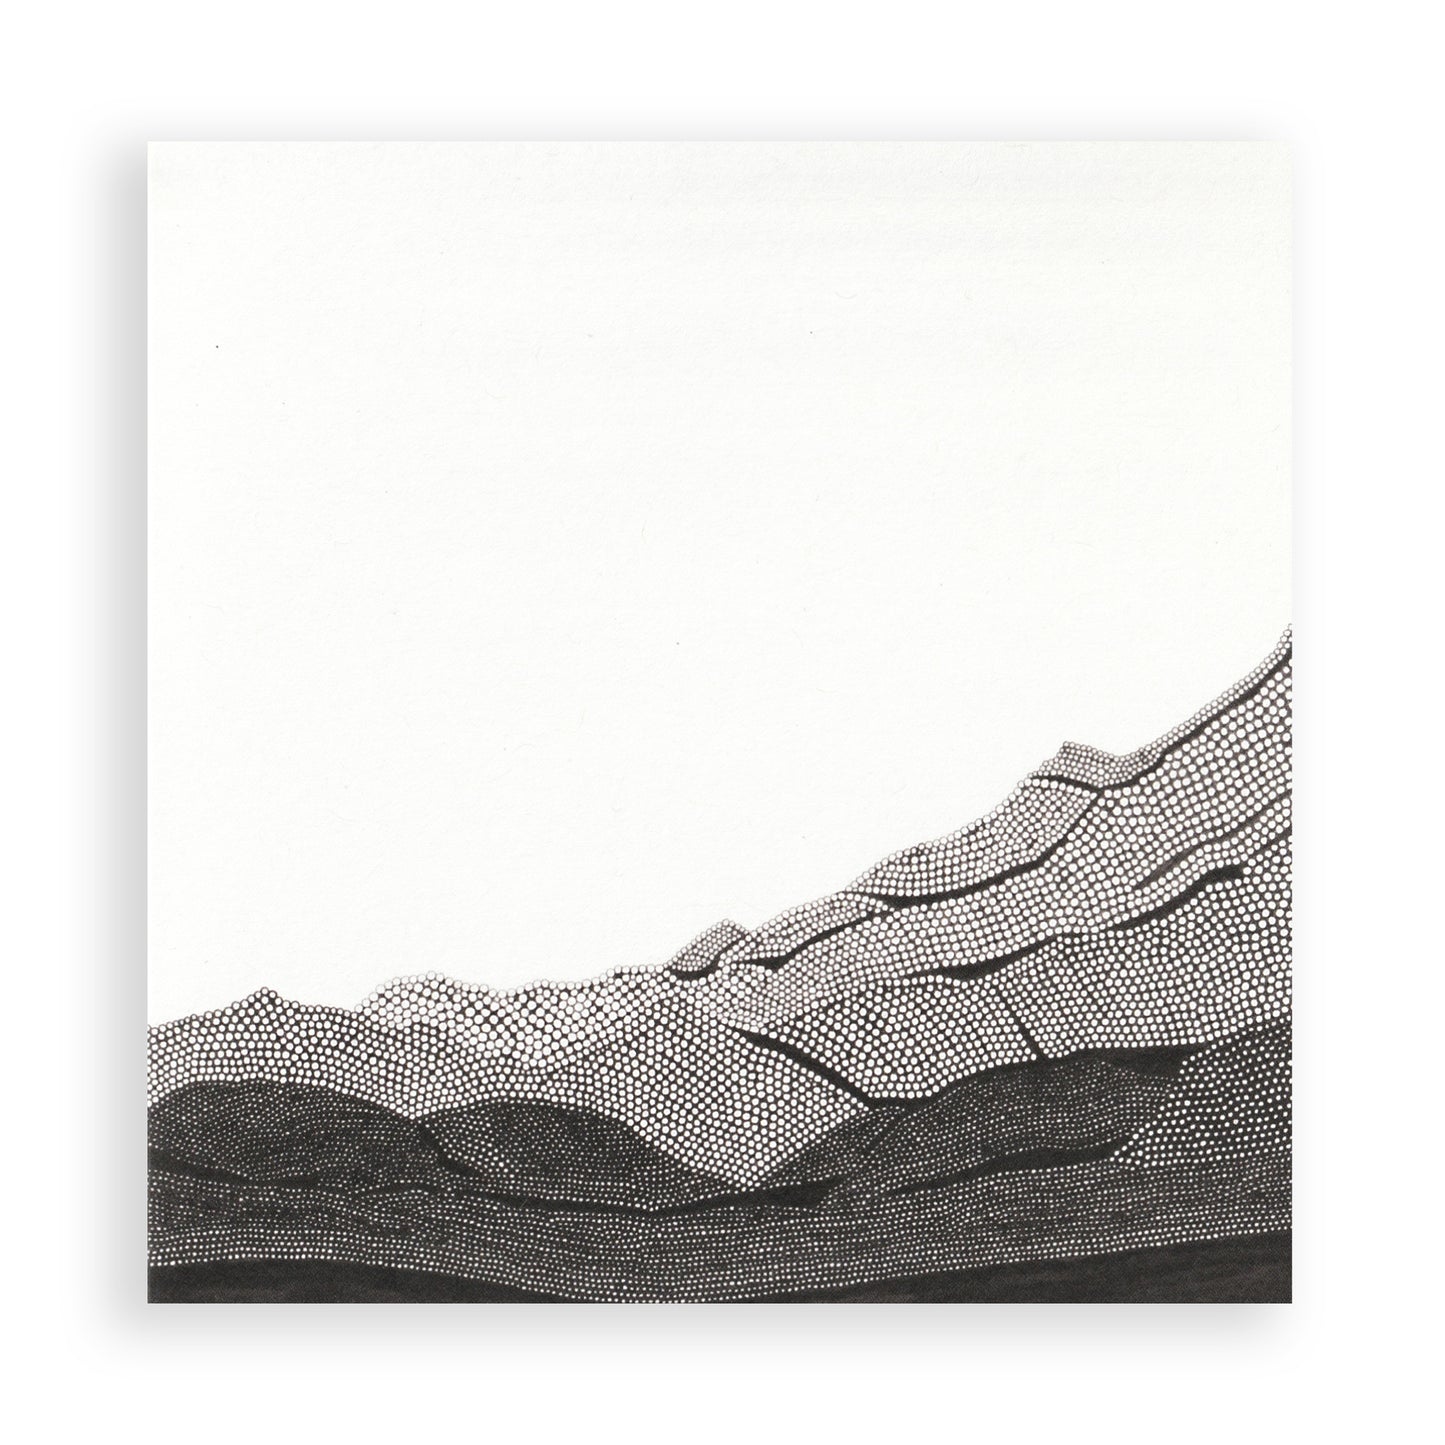 Mountains in Korea 2022_02 Art Card Print